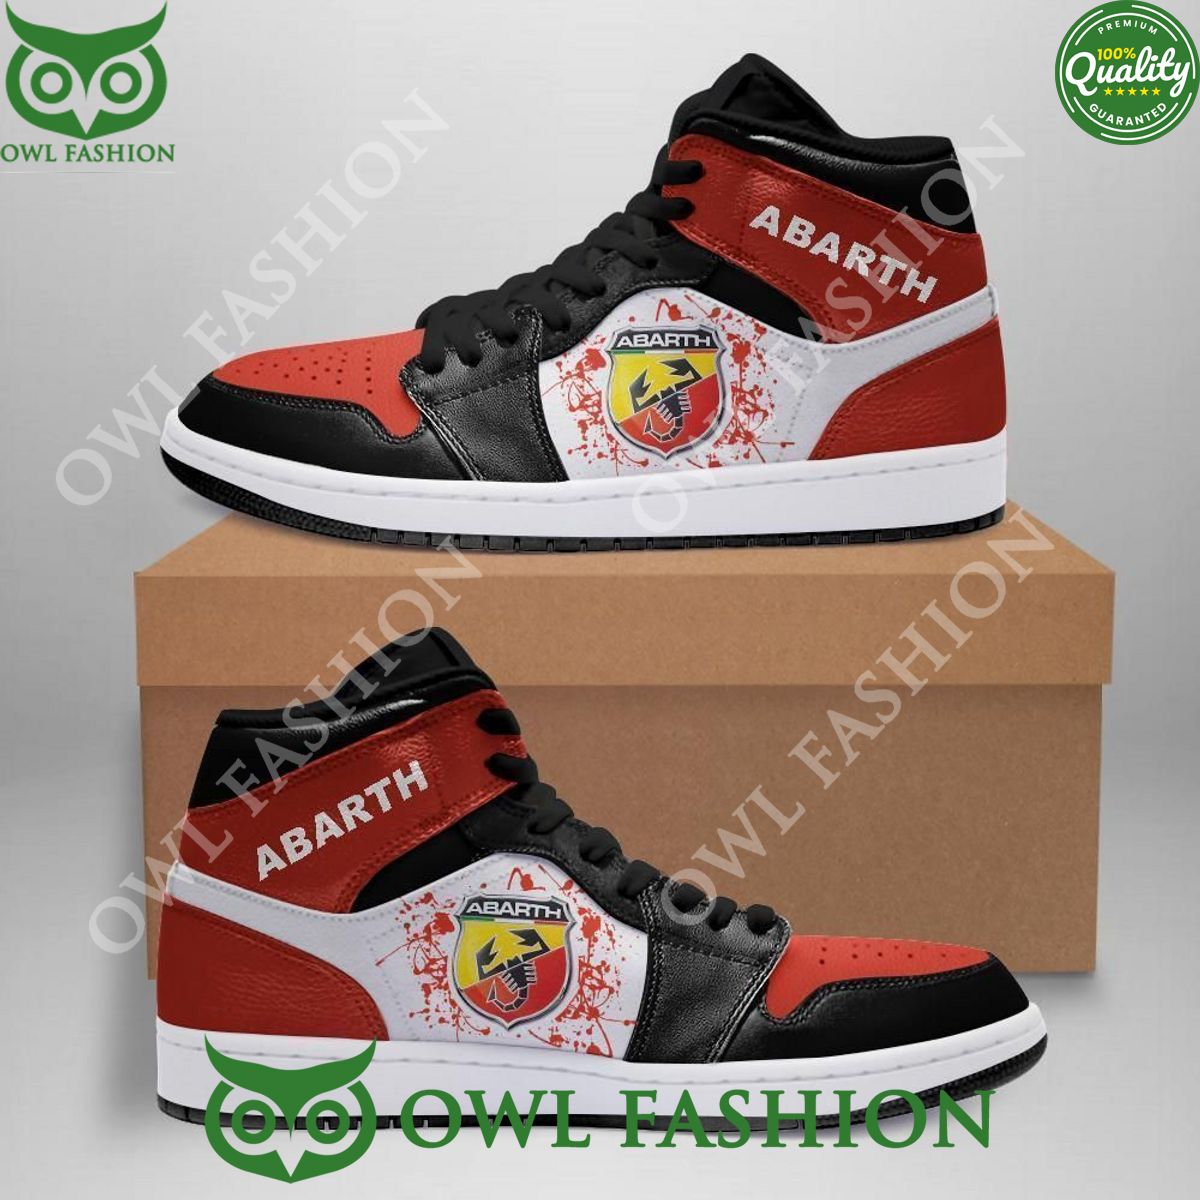 Abarth Automobile Luxury Car Air Jordan Sneakers Shoes Sport